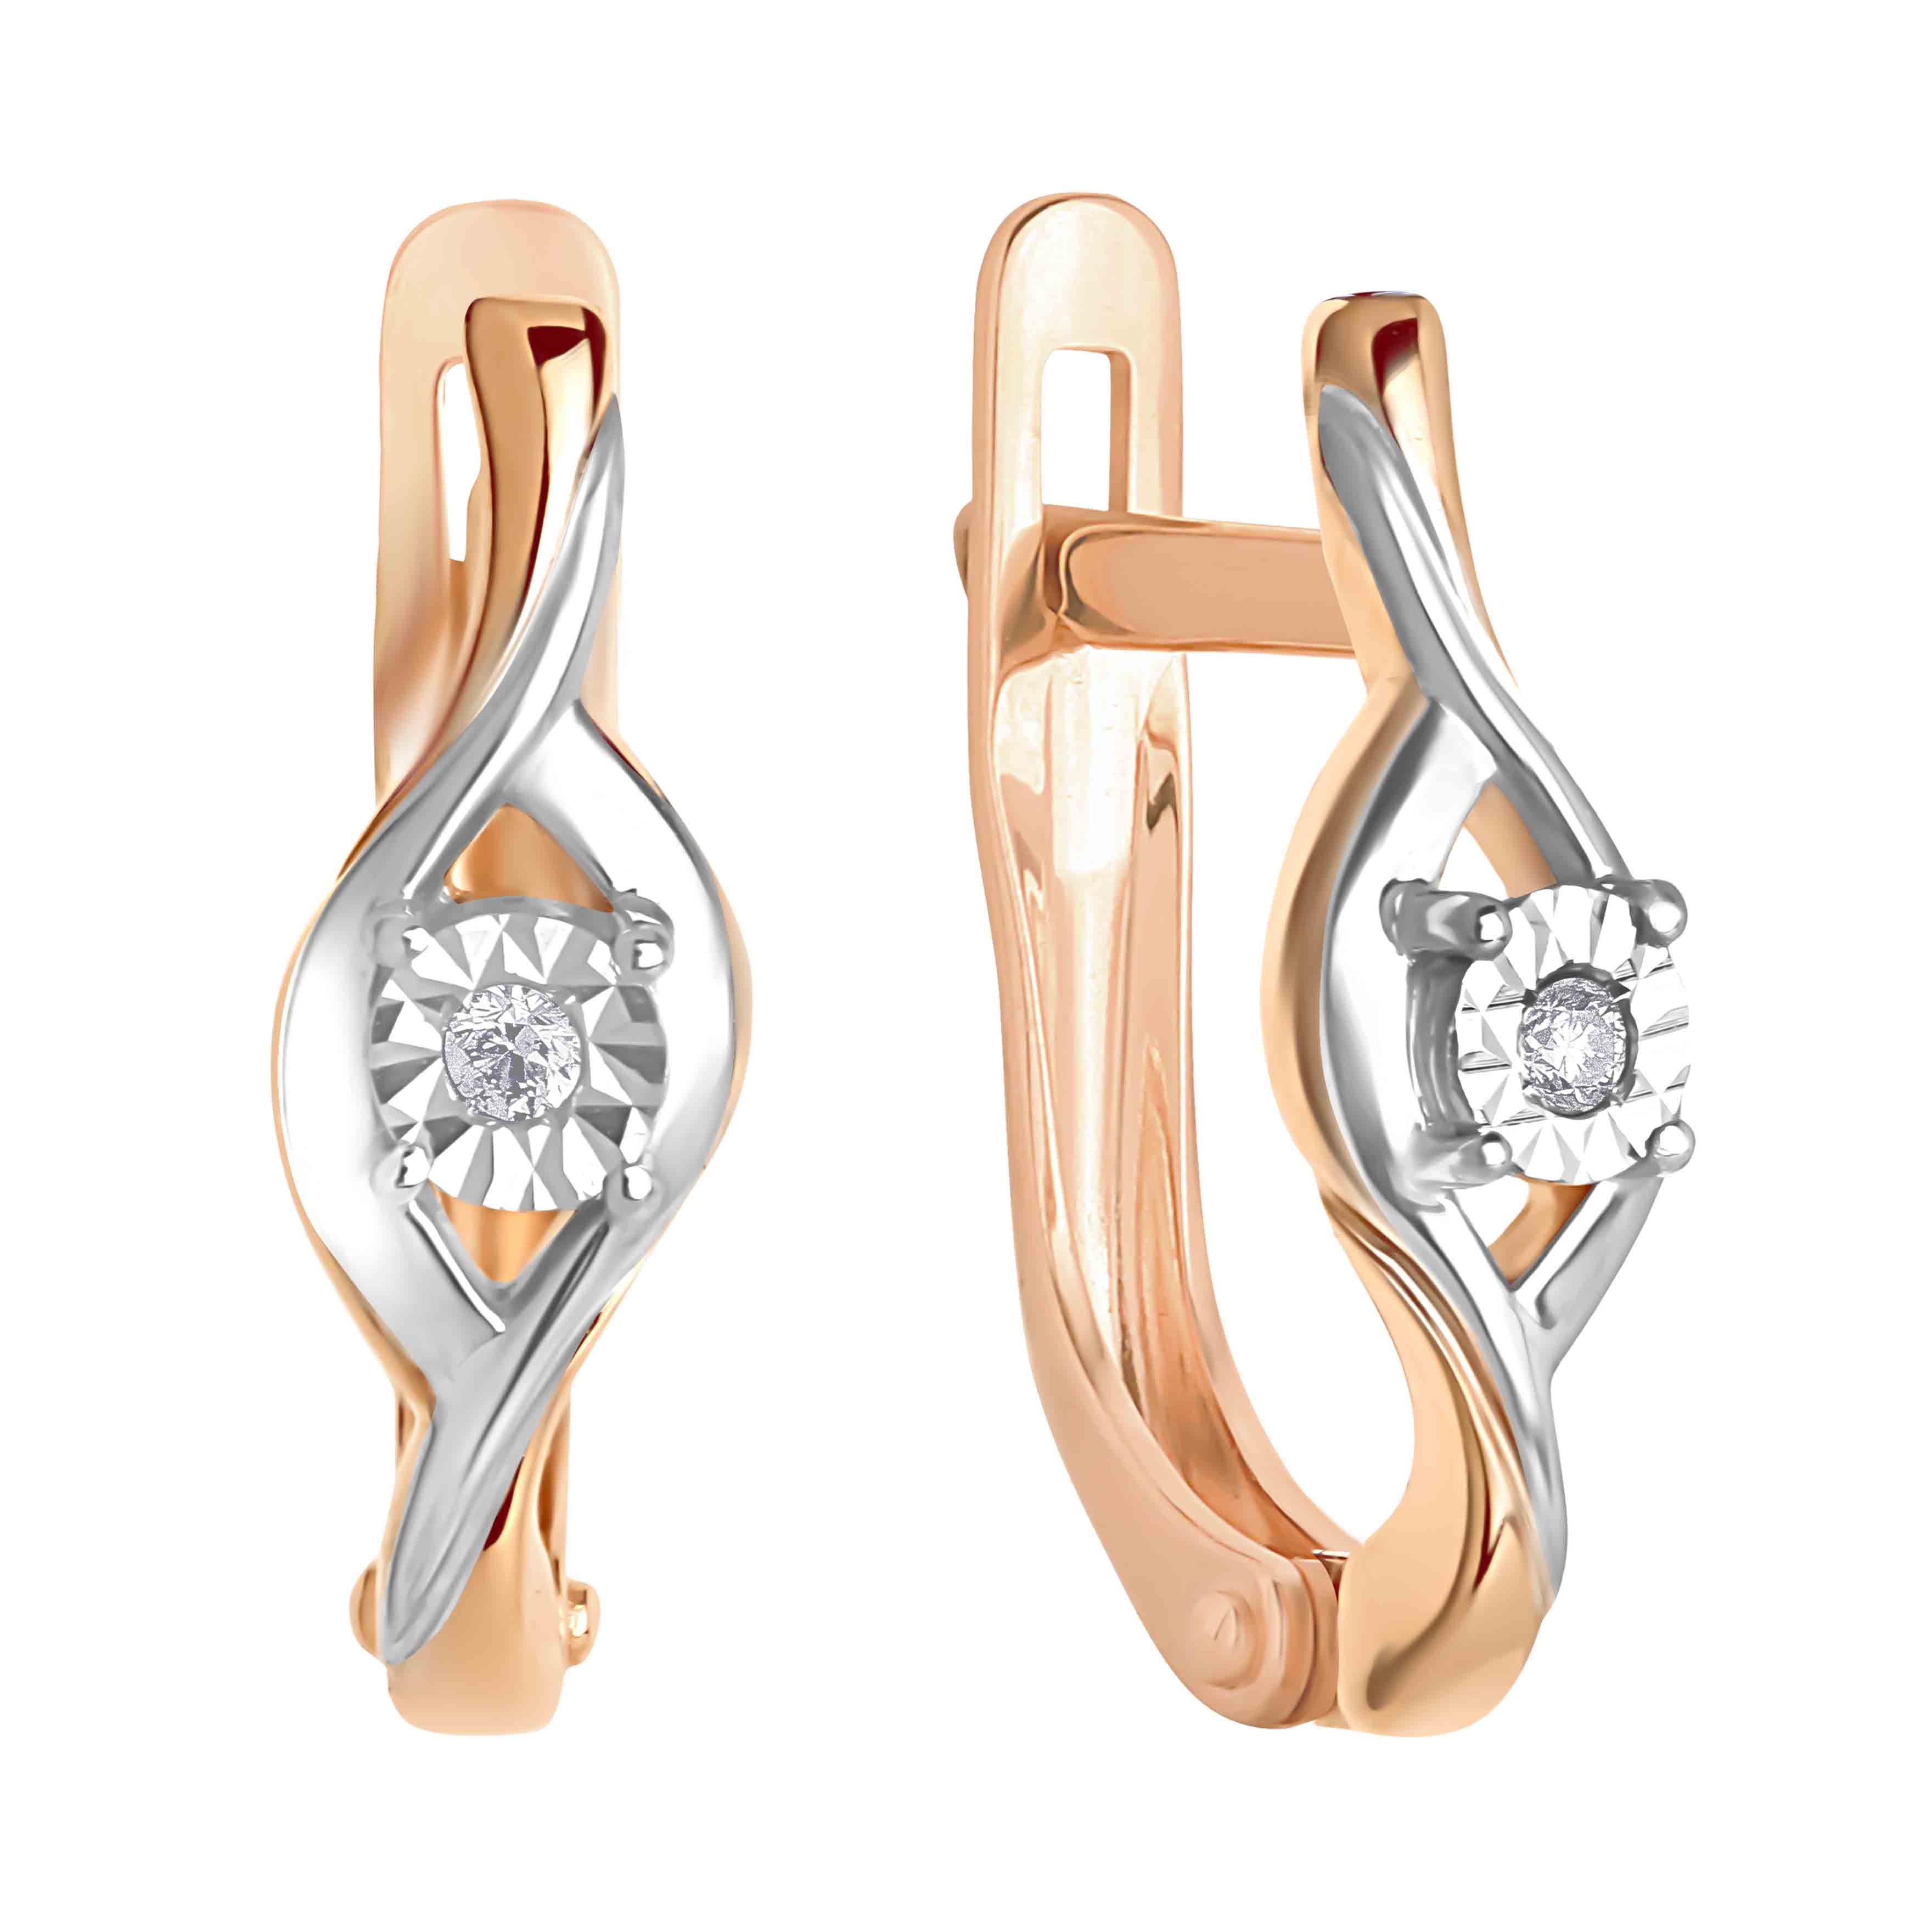 Diamond Leverback Earrings. Certified 585 (14kt) Rose Gold, Rhodium Detailing. Solitaire Diamond Leverback Earrings